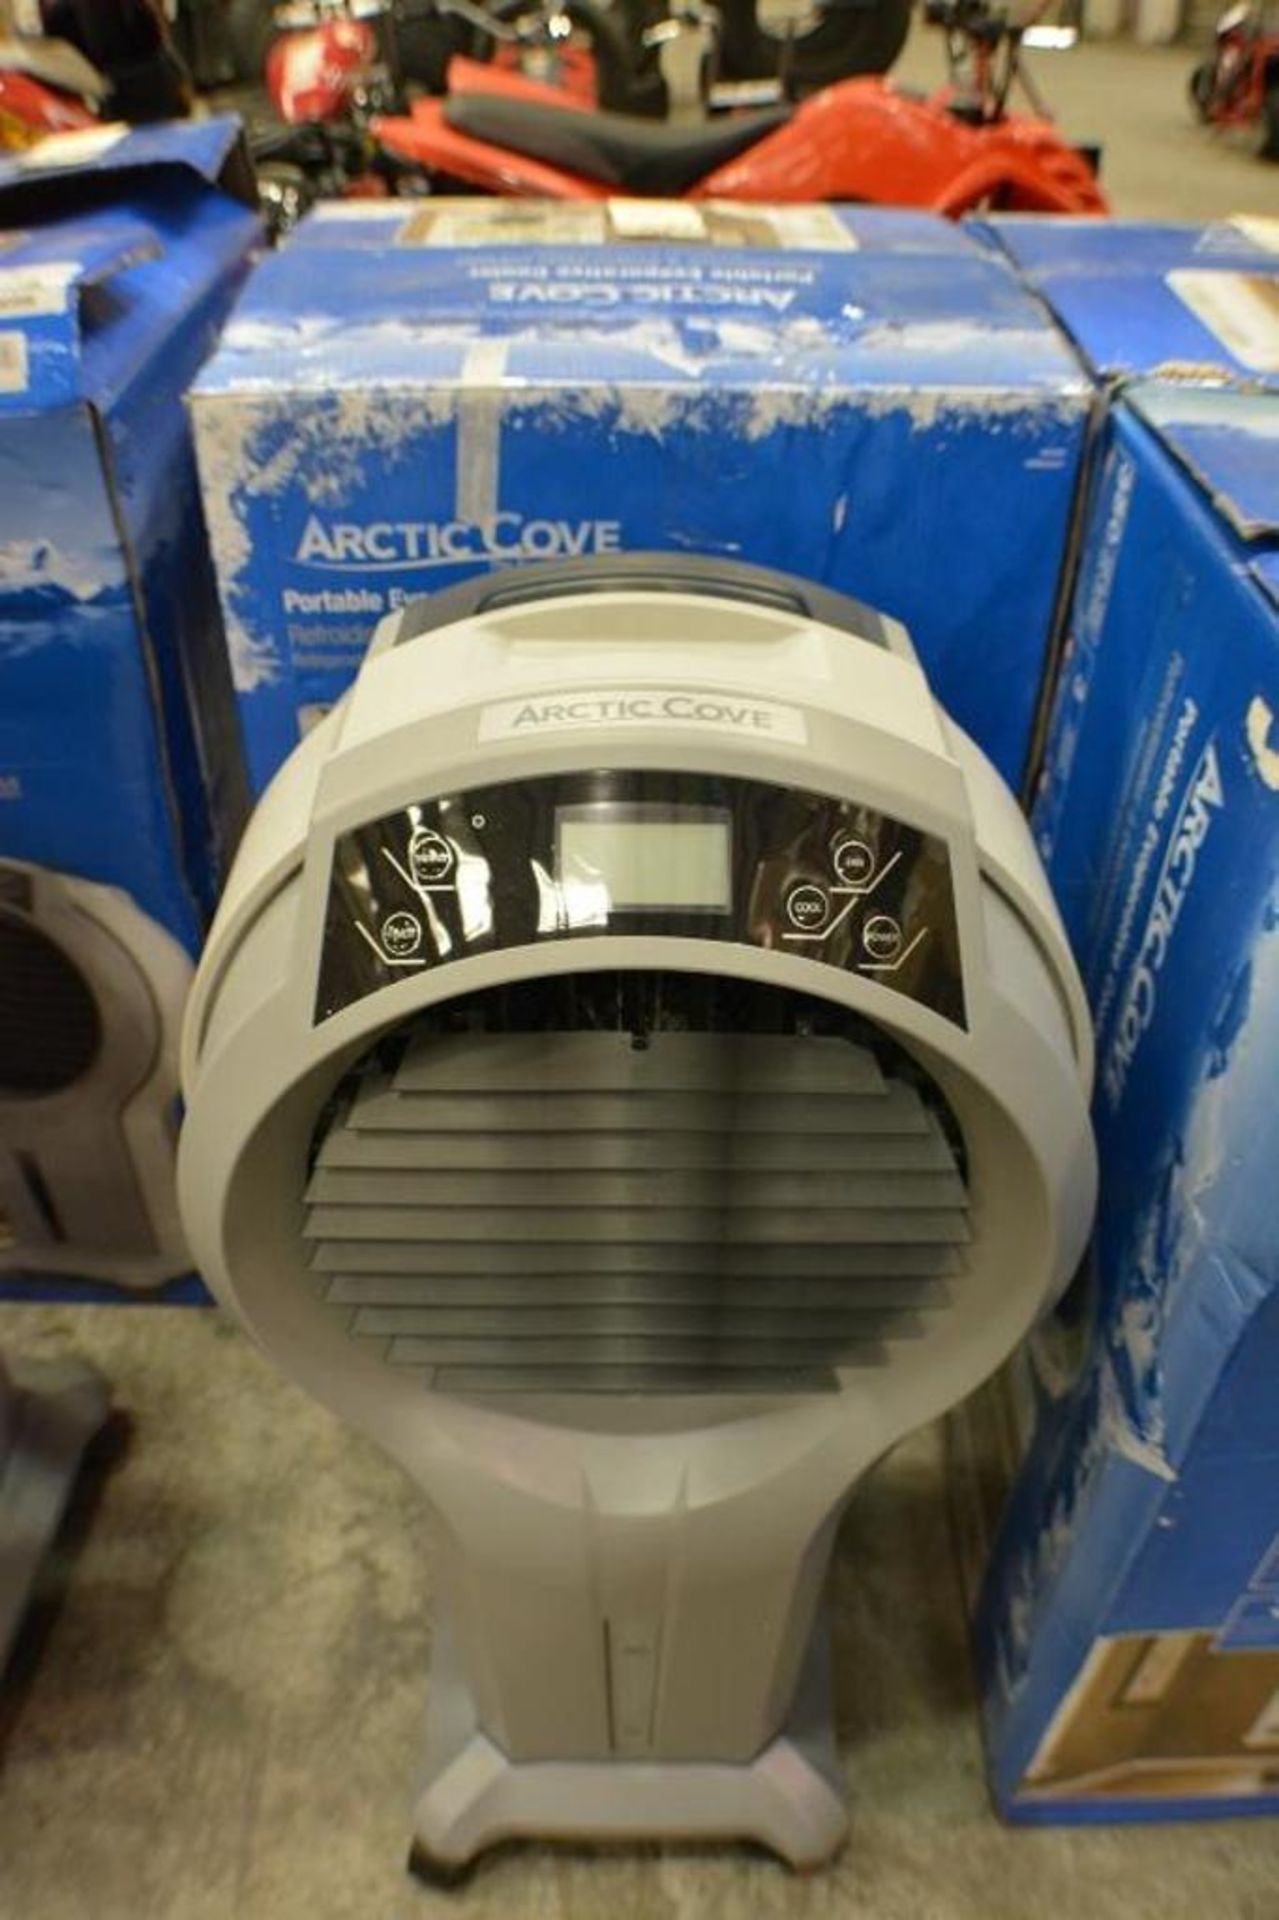 Portable Evaporative Cooler 350 Cubit Feet per minute air volume 3 Gallon Water Capacity 3 Speed Set - Image 2 of 3